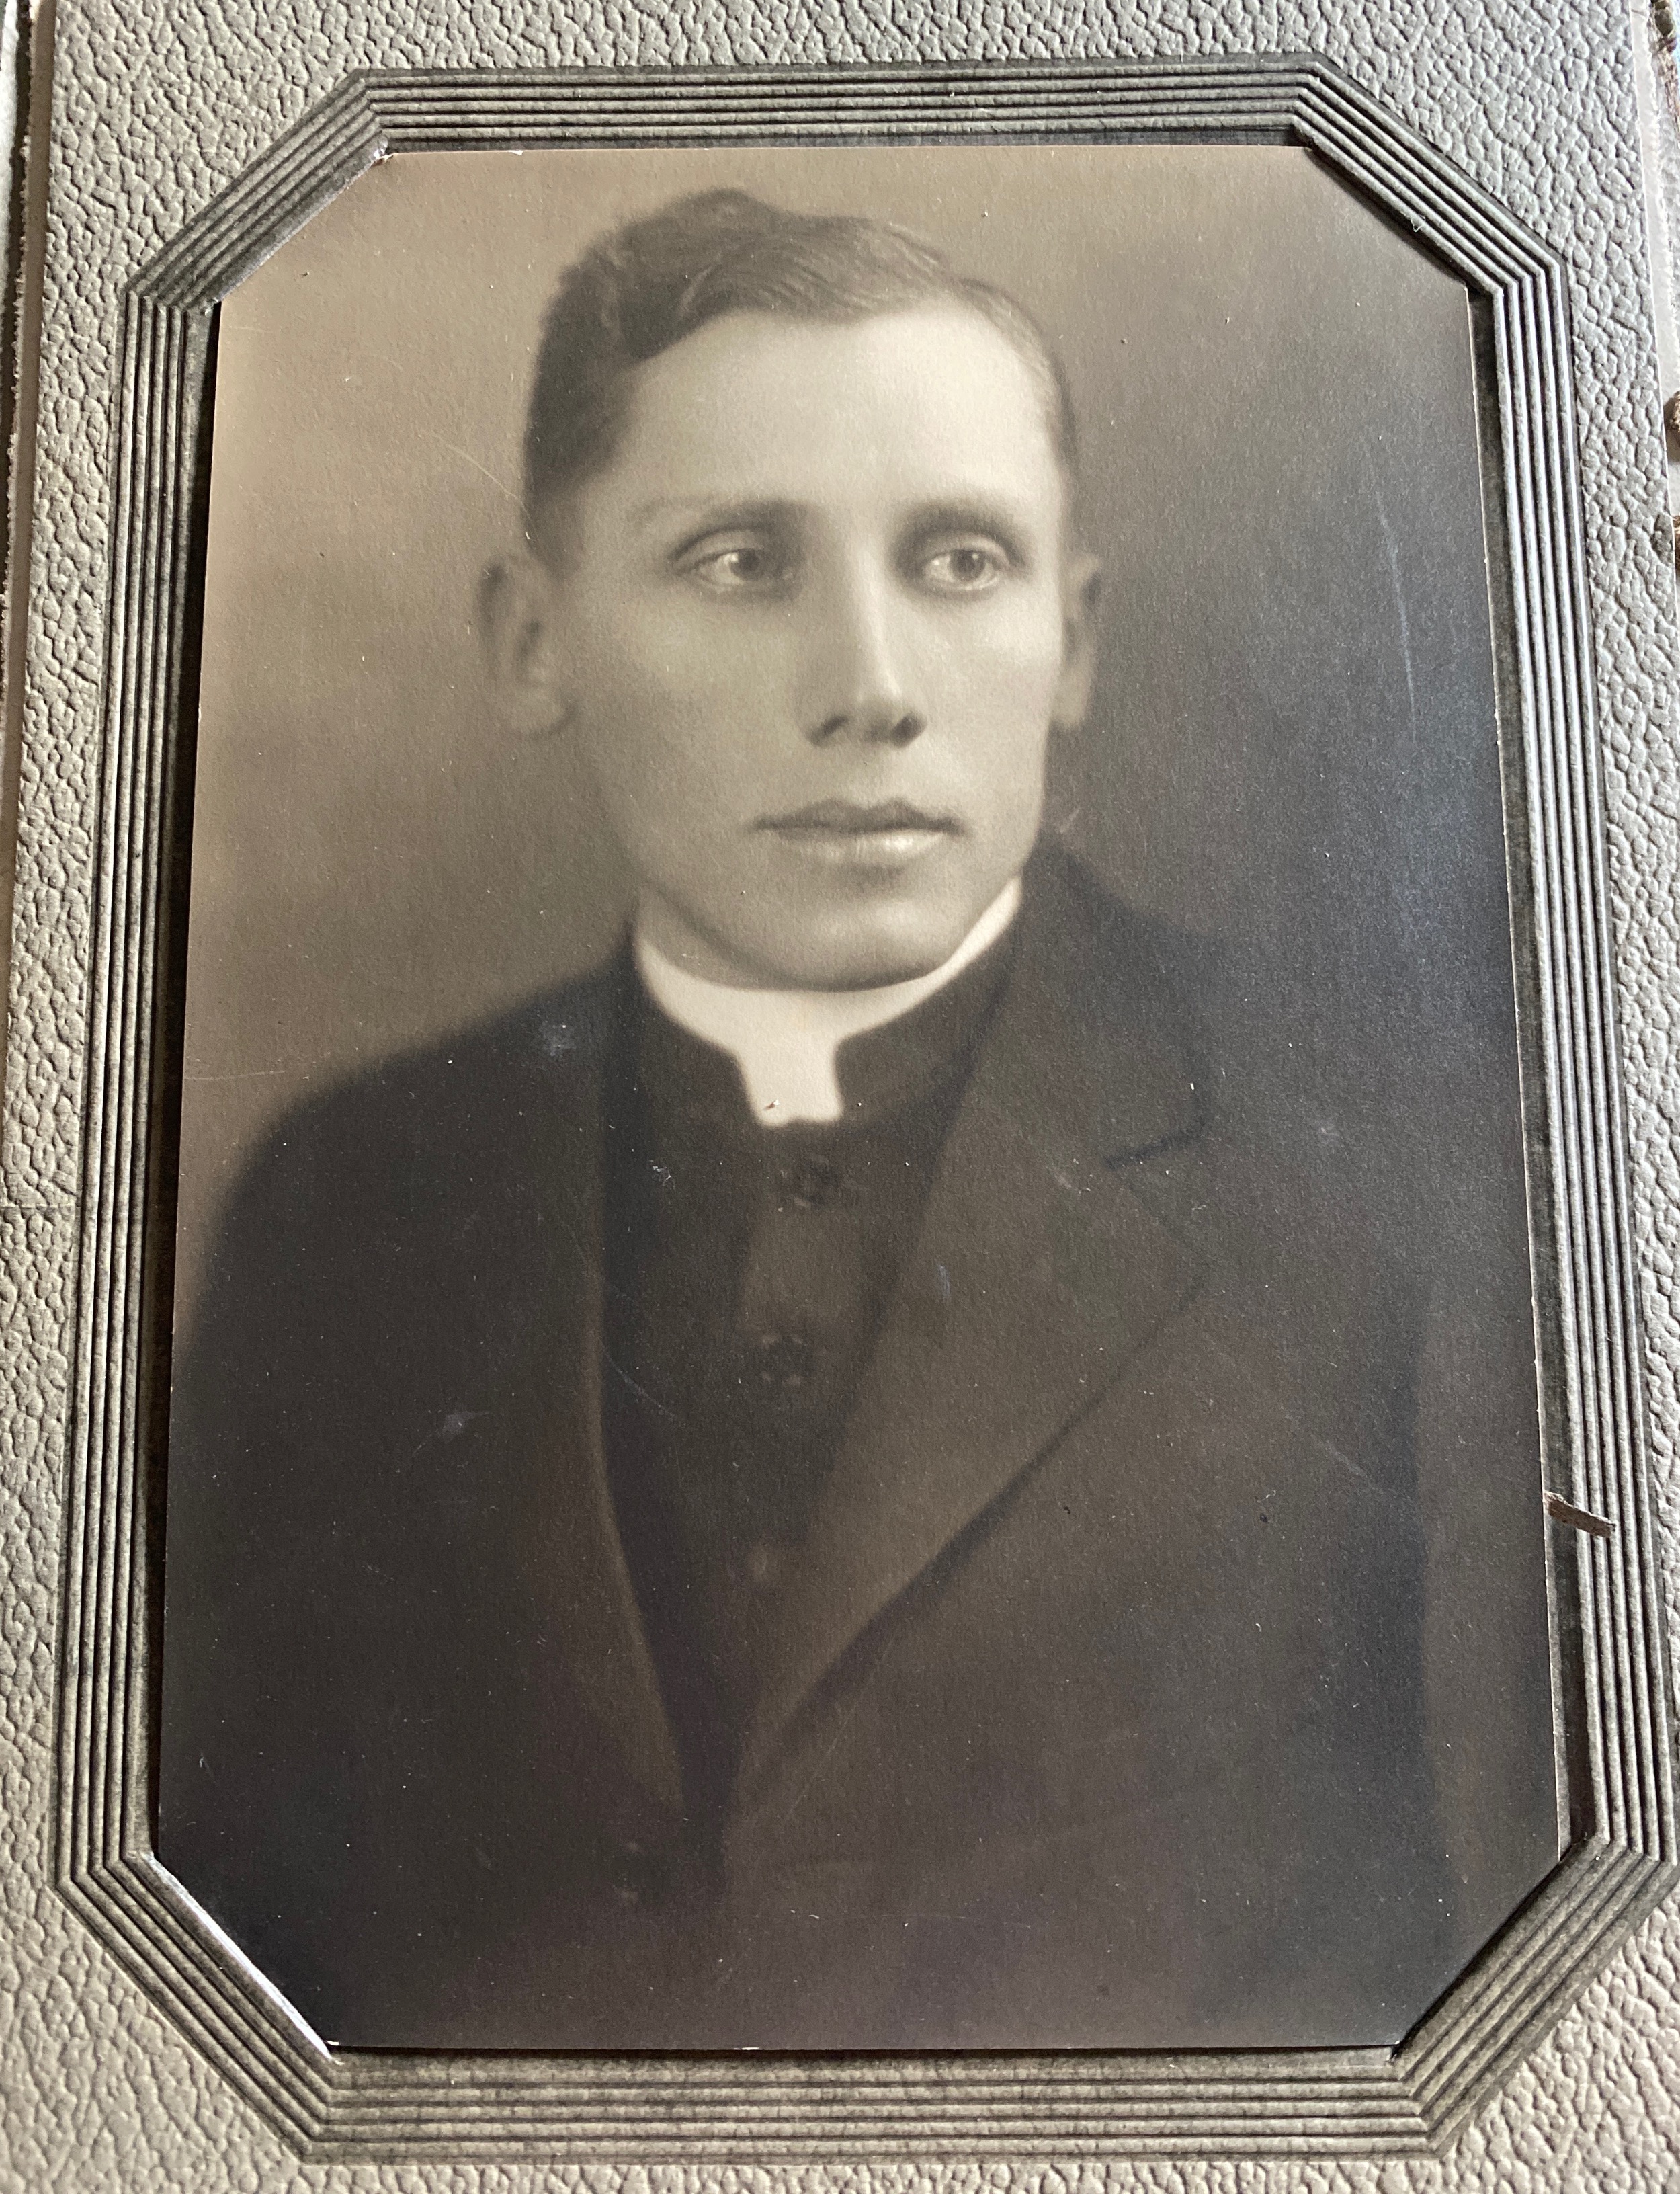 Father John 1925 
1st year of priesthood